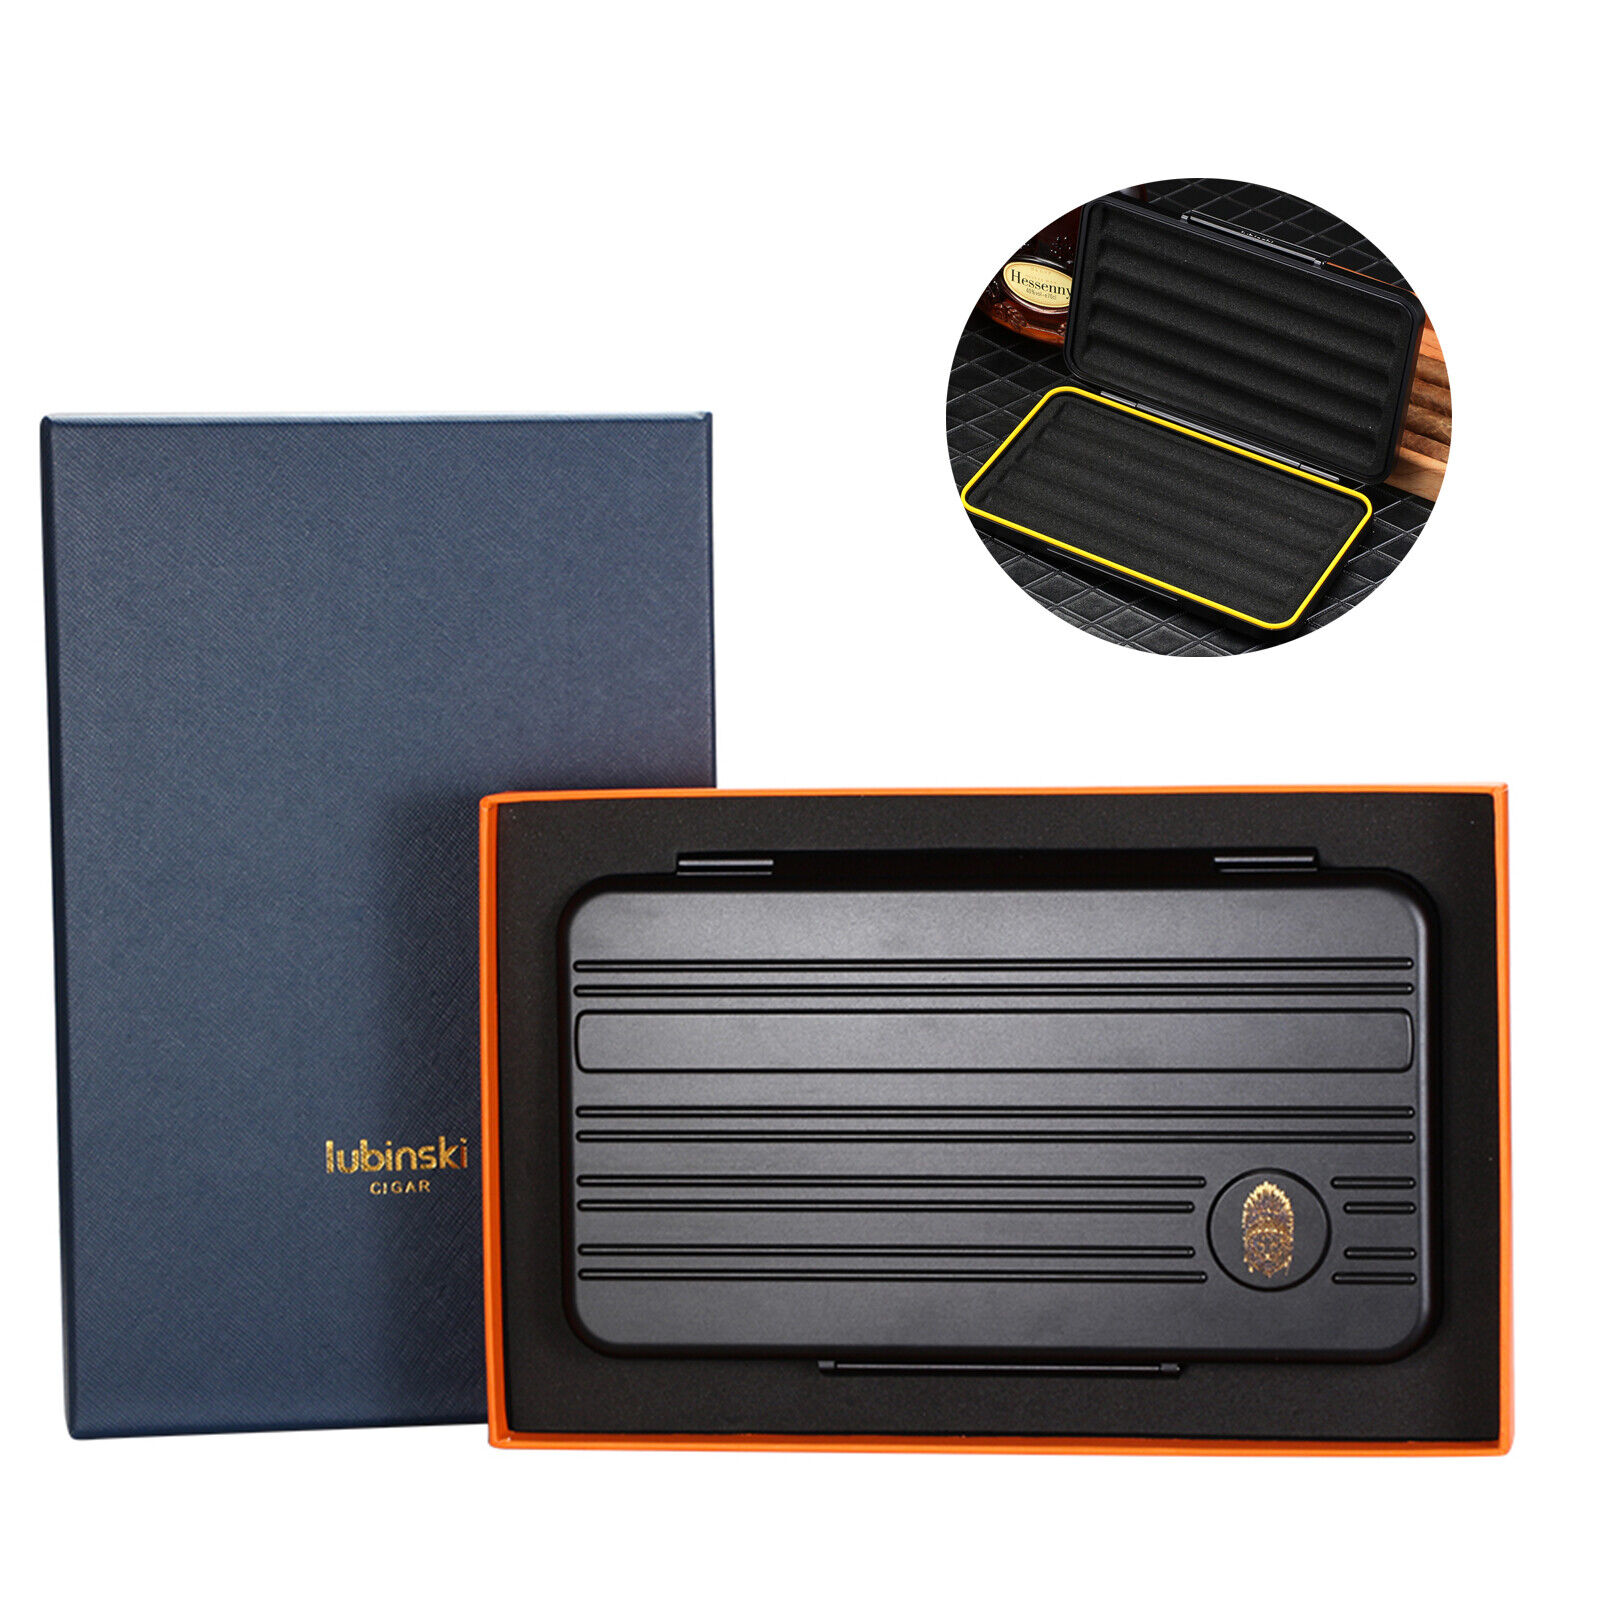 Lubinski Travel Metal Humidor 5 Tube Cigars Case Luxury Portable Tobacco Box Set